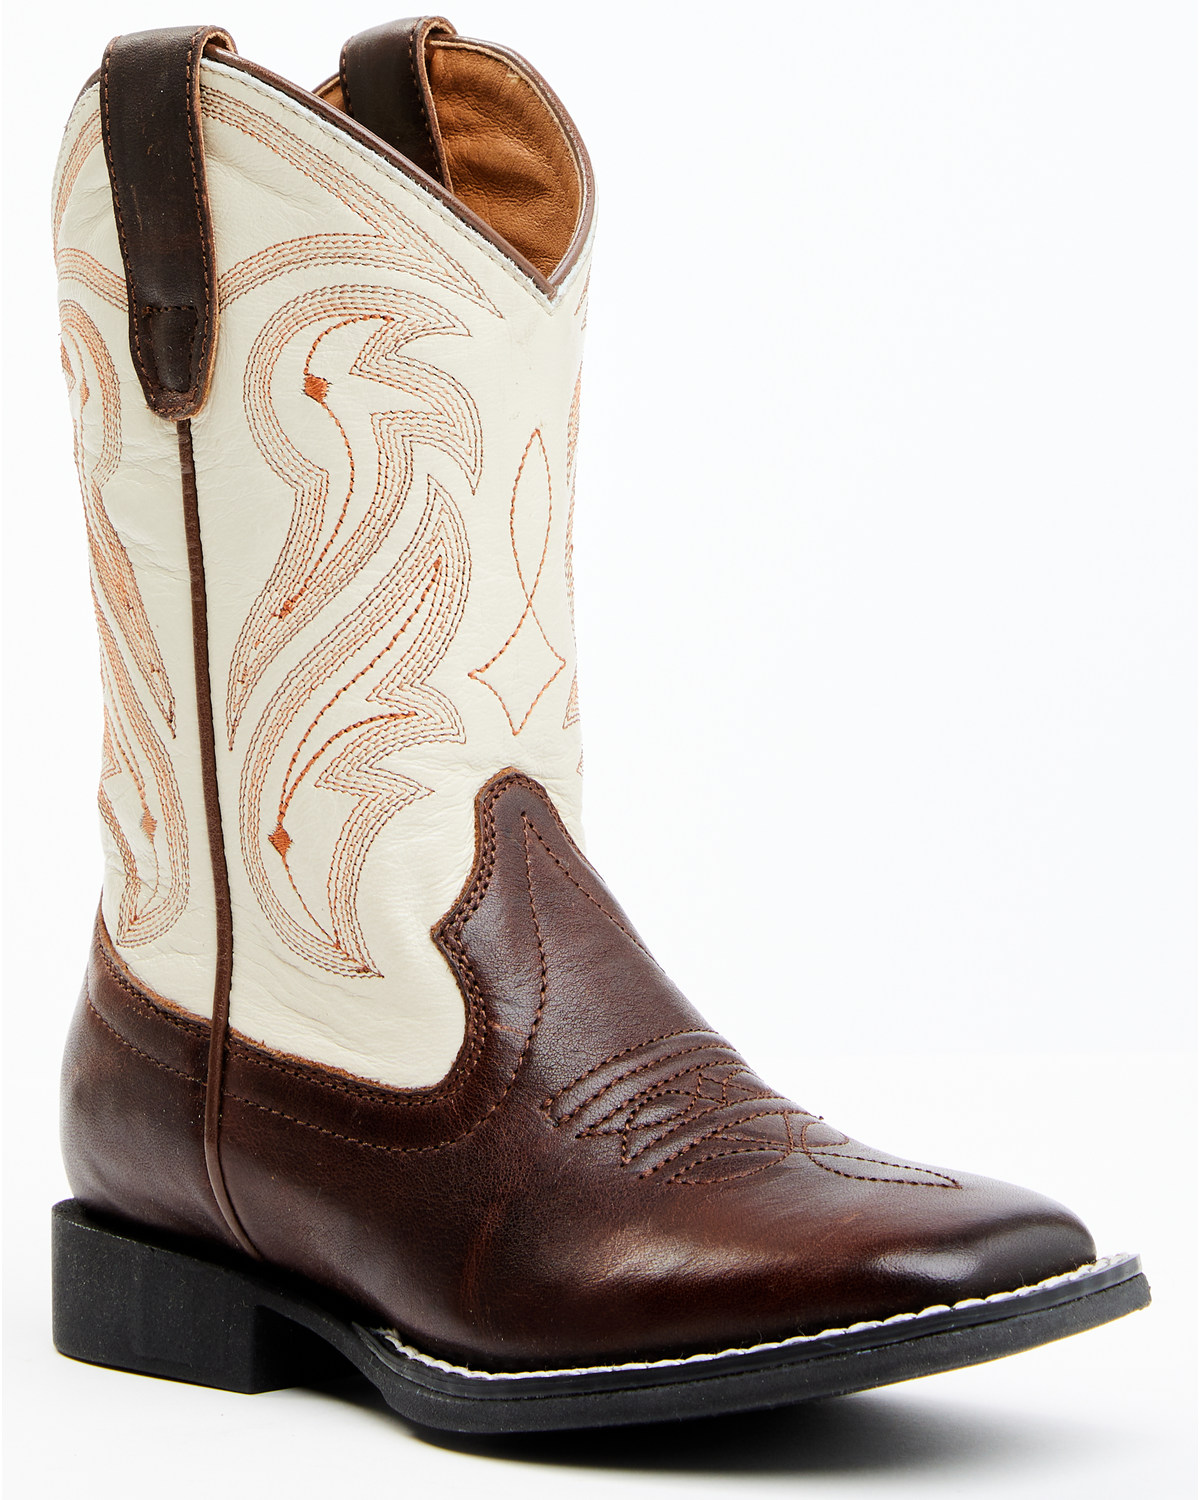 RANK 45® Boys' Austin Western Boots - Broad Square Toe